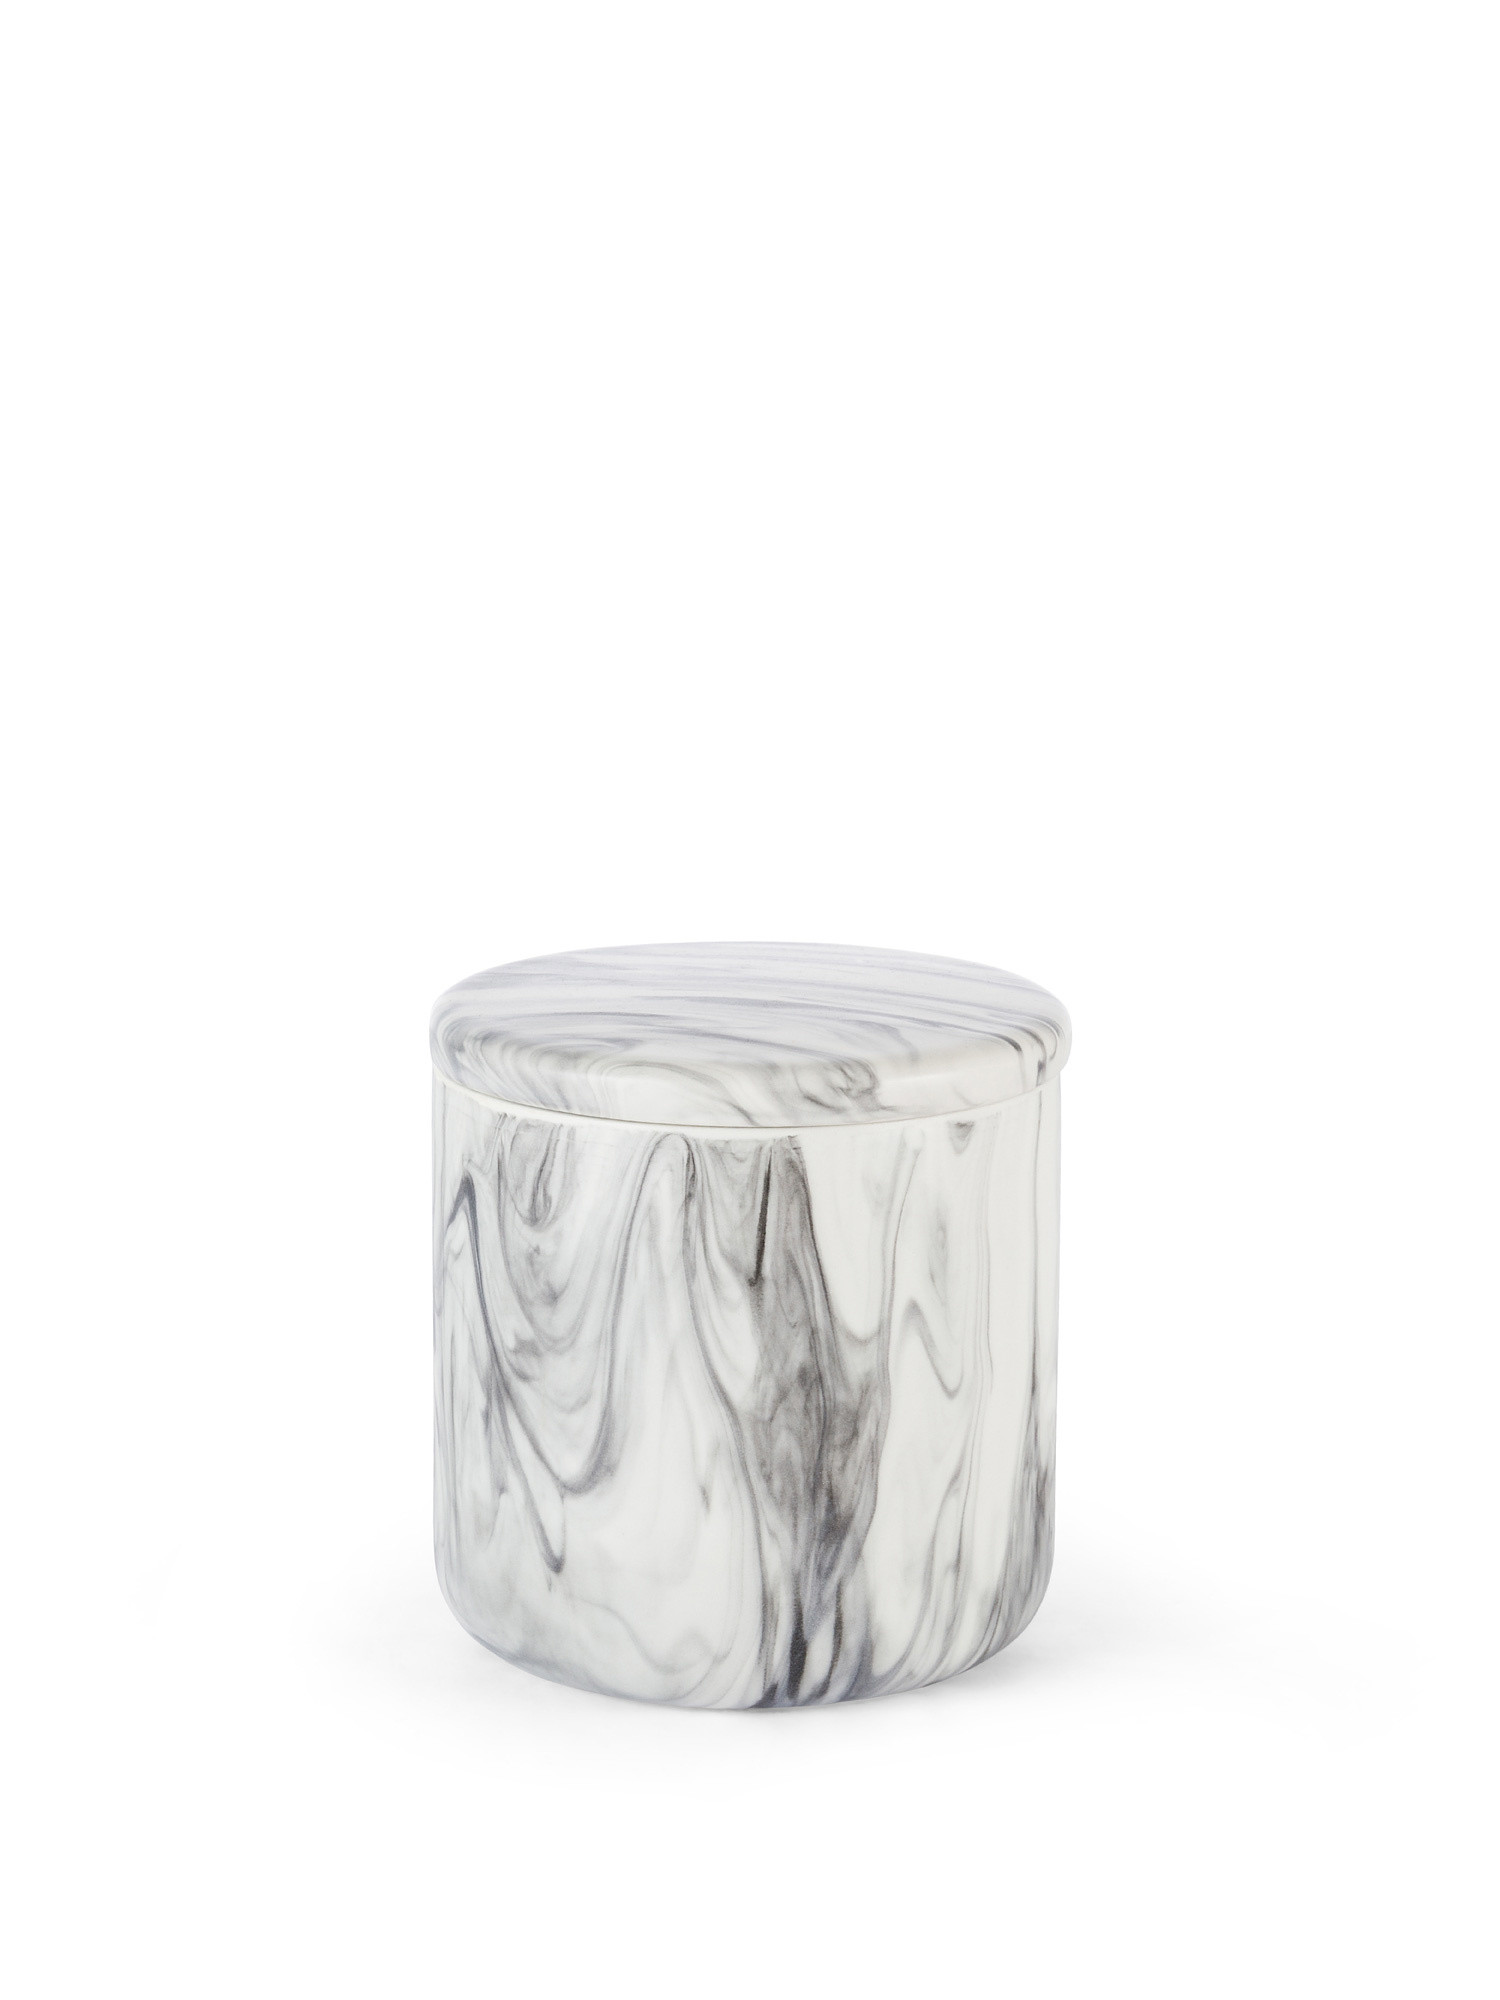 Porta cotone ceramica portoghese effetto marmo, Bianco/Nero, large image number 0